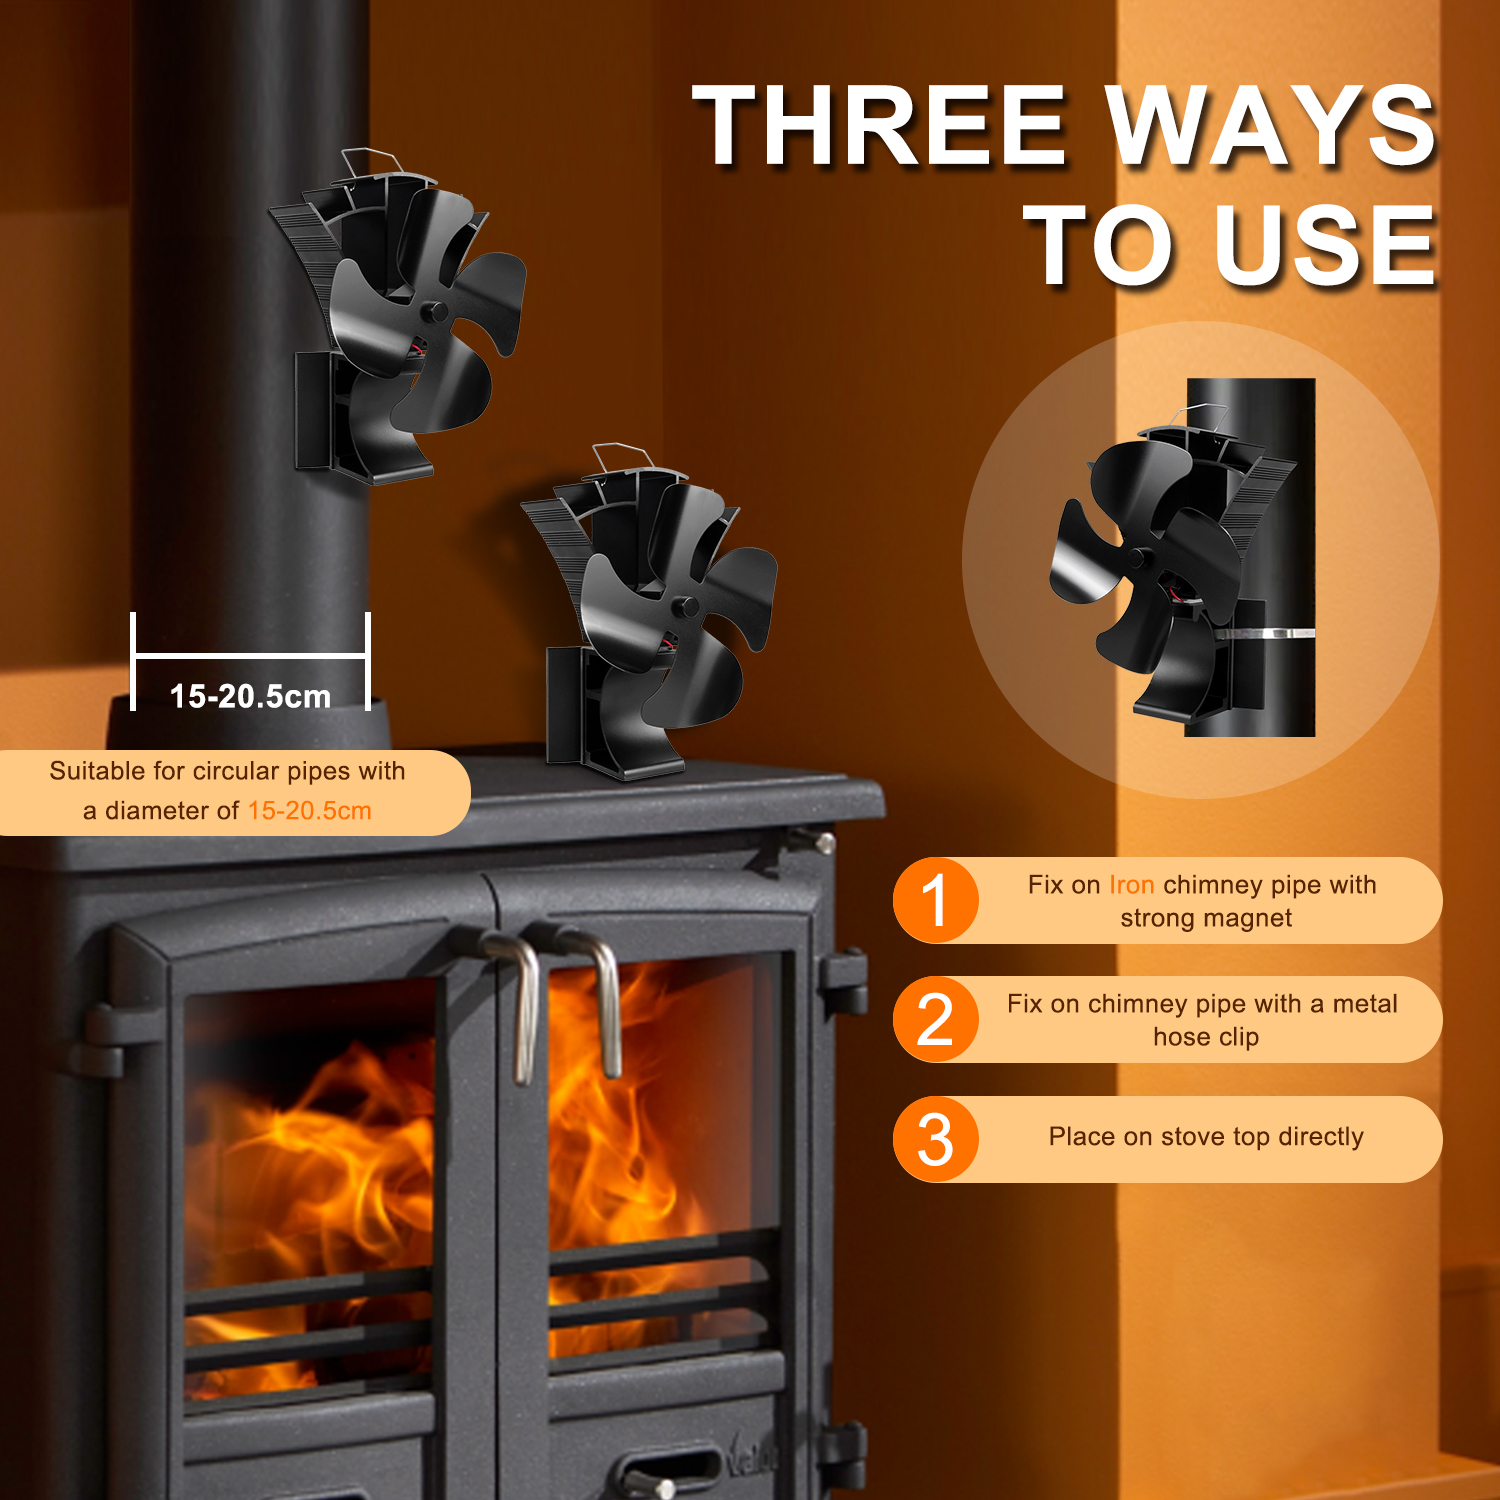 Voda heat powered stove fan manufacturer, fireplace supplier.